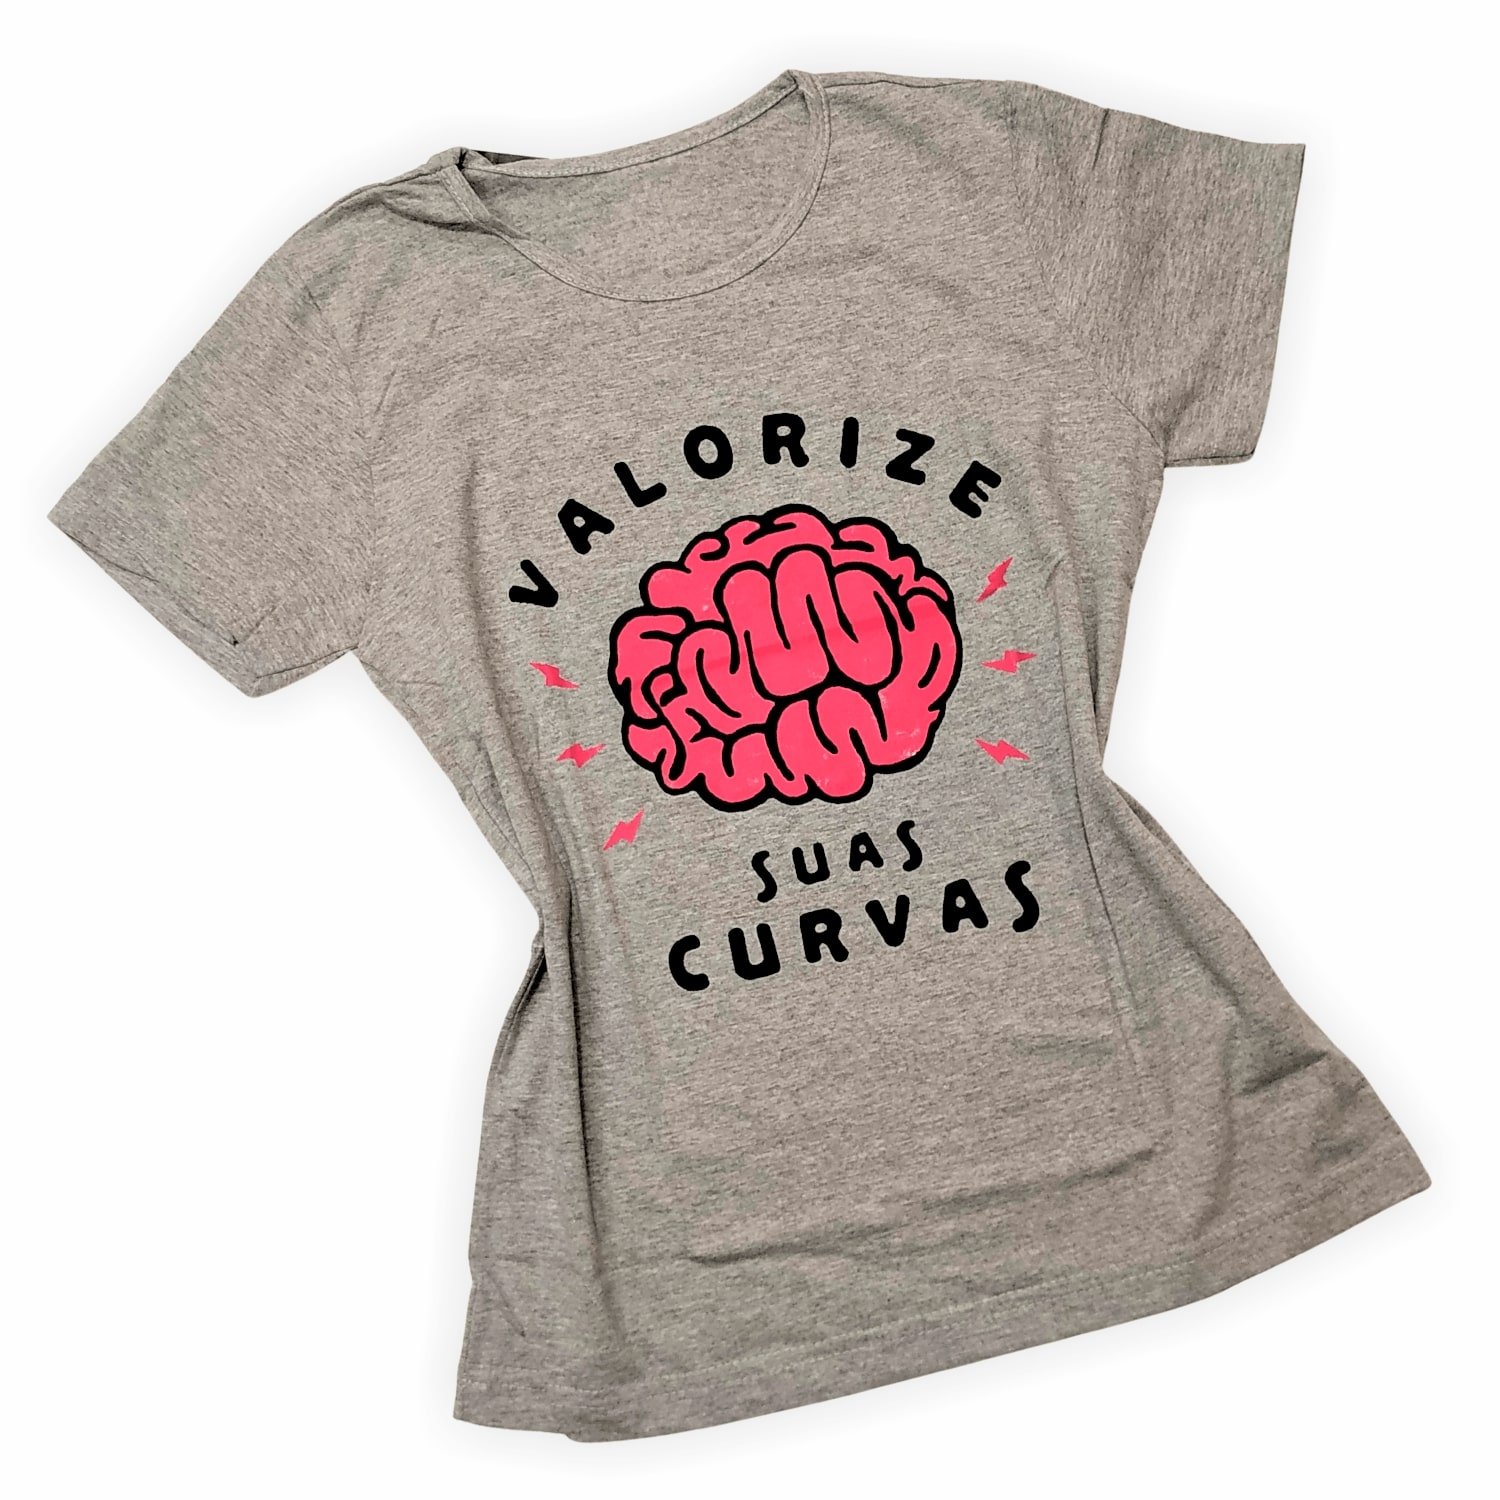 https://uoustore.com/wp-content/uploads/2021/04/camiseta-baby-look-blusa-valorize-suas-curvas-3.jpg